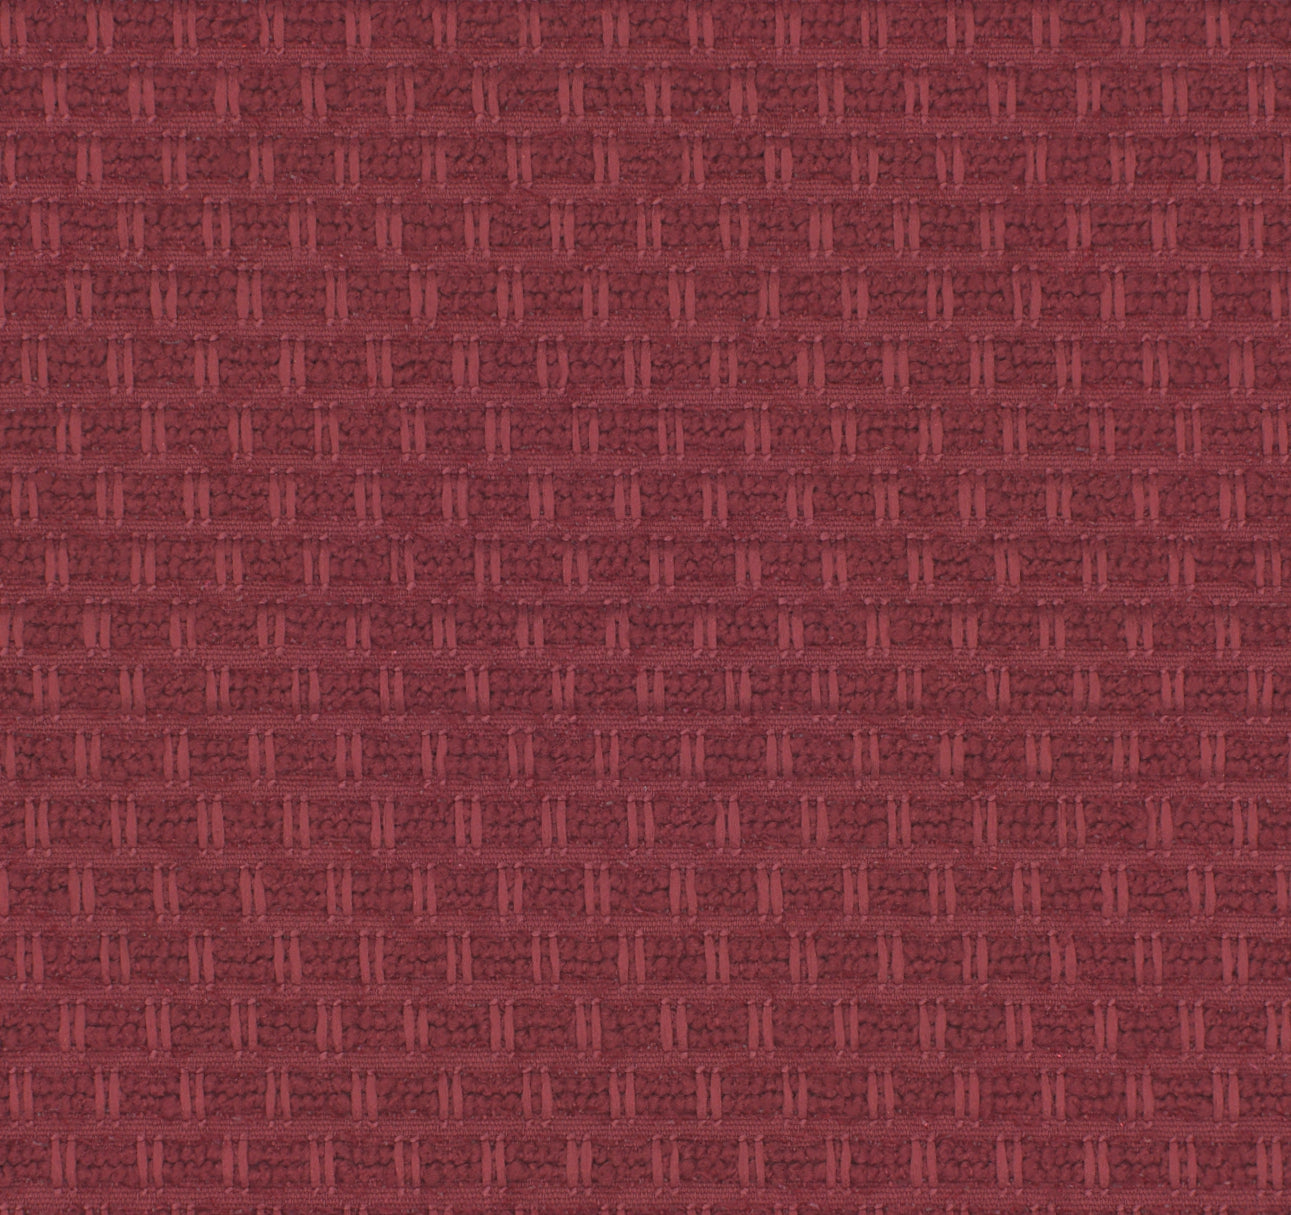 32011-02 Brick Red Woven Jacquard Plain Dyed Blend blend jacquard plain dyed red woven Jacquard, Solid Color - knit fabric - woven fabric - fabric company - fabric wholesale - fabric b2b - fabric factory - high quality fabric - hong kong fabric - fabric hk - acetate fabric - cotton fabric - linen fabric - metallic fabric - nylon fabric - polyester fabric - spandex fabric - chun wing hing - cwh hk - fabric worldwide ship - 針織布 - 梳織布 - 布料公司- 布料批發 - 香港布料 - 秦榮興